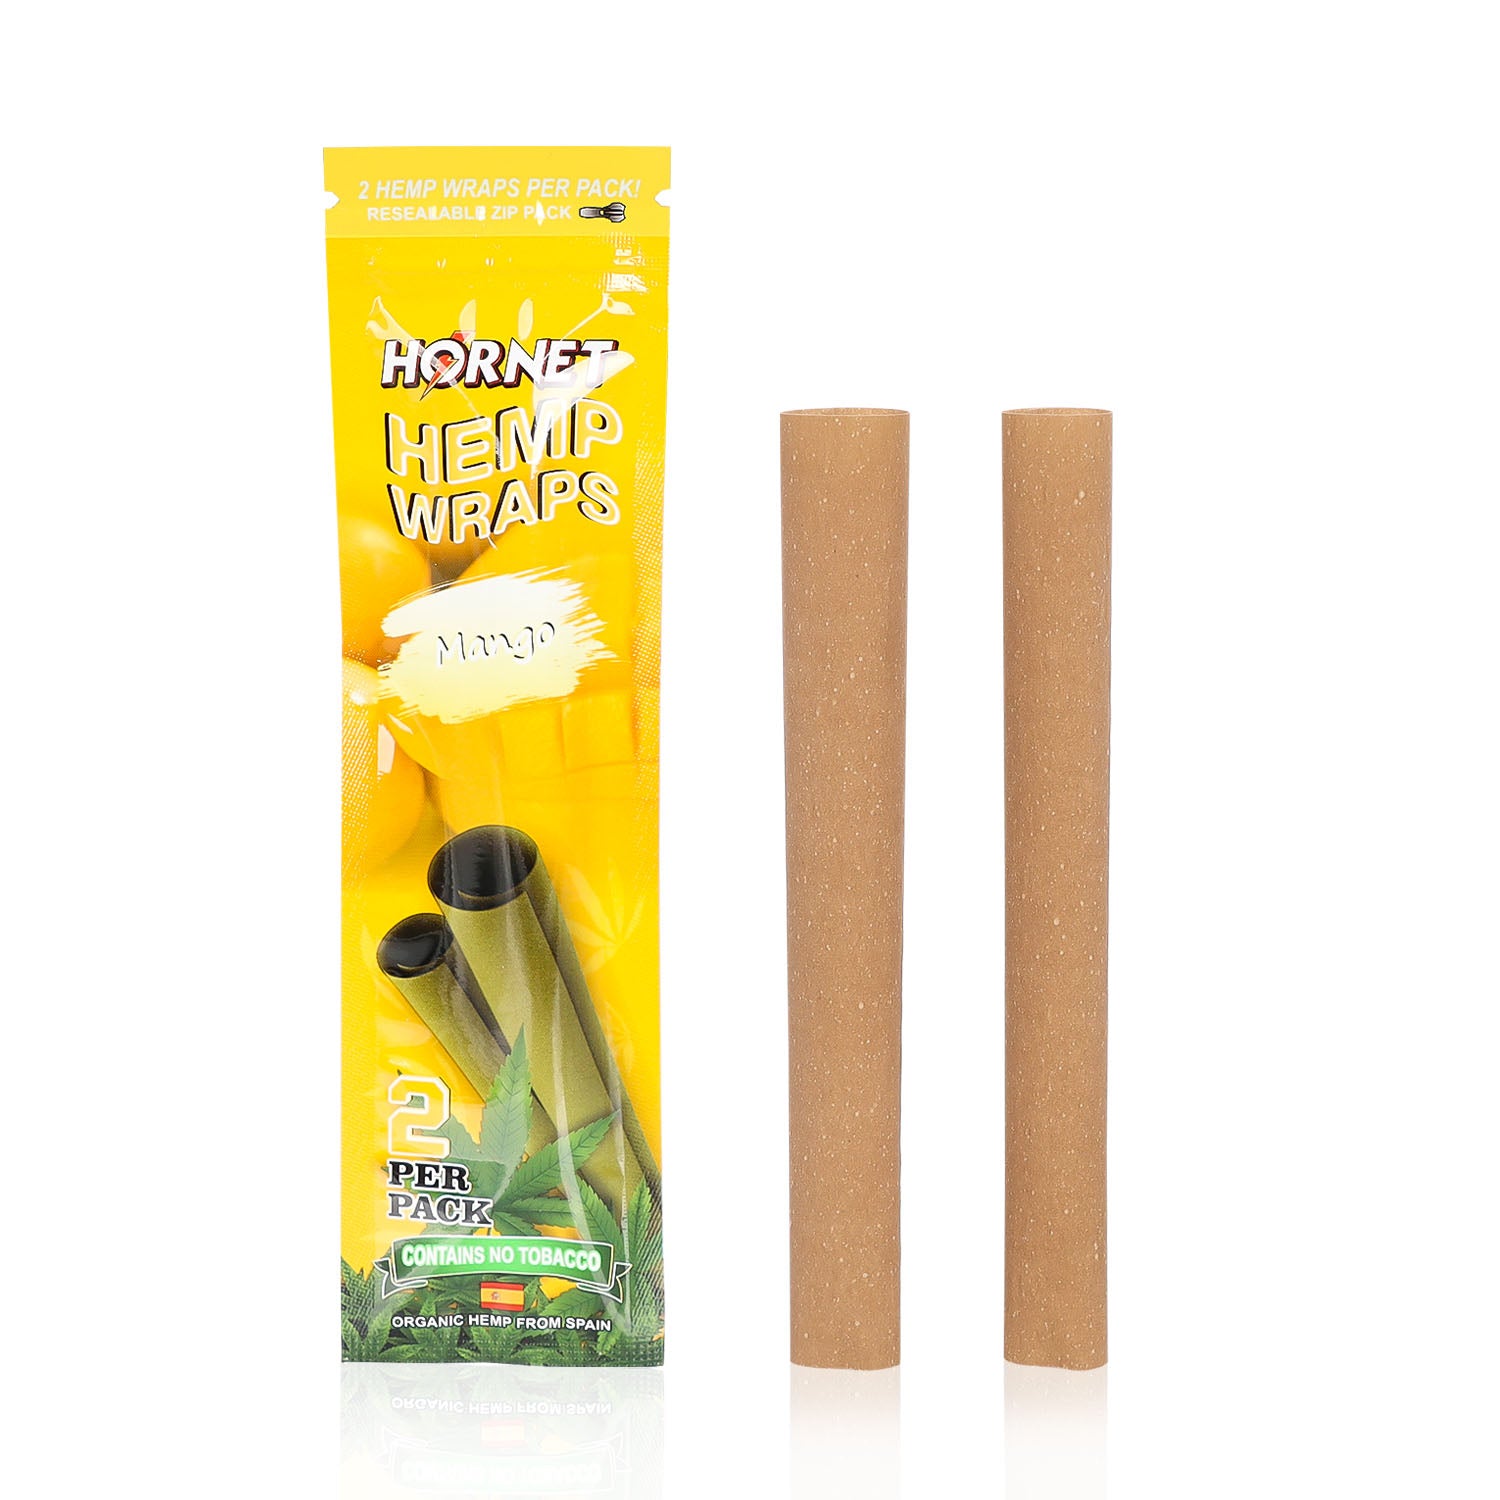 Hornet Mango Flavoured Hemp Blunt Wraps 30 Hemp Wraps Per Box